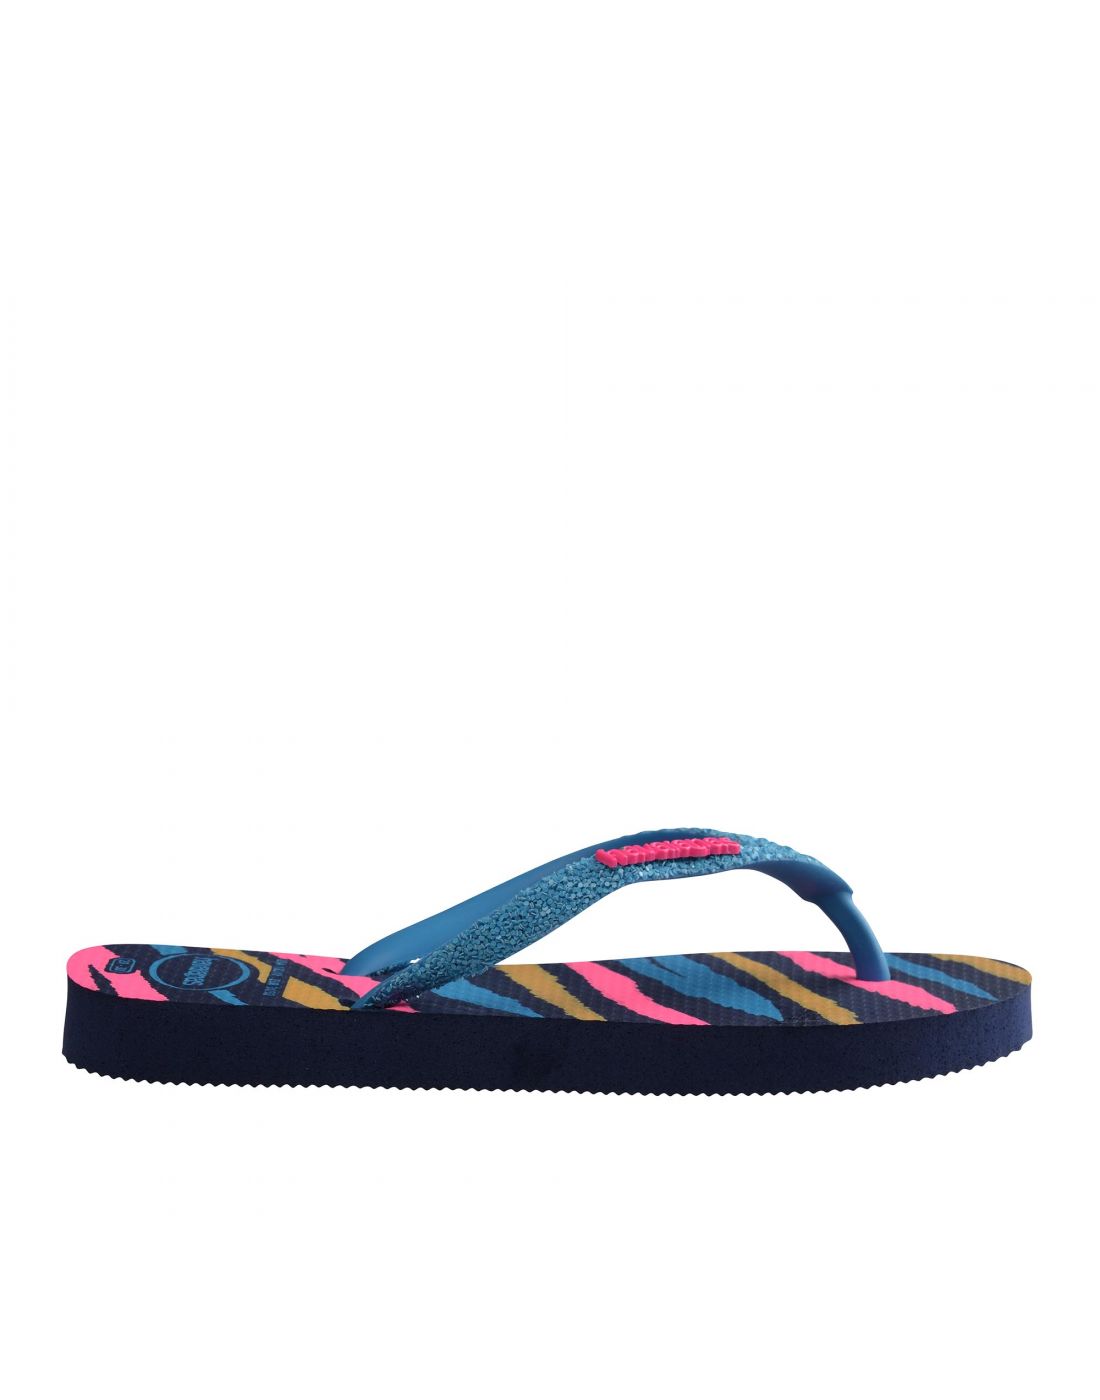 Havaianas Flip-Flops  Slim Glitter Navy Blue